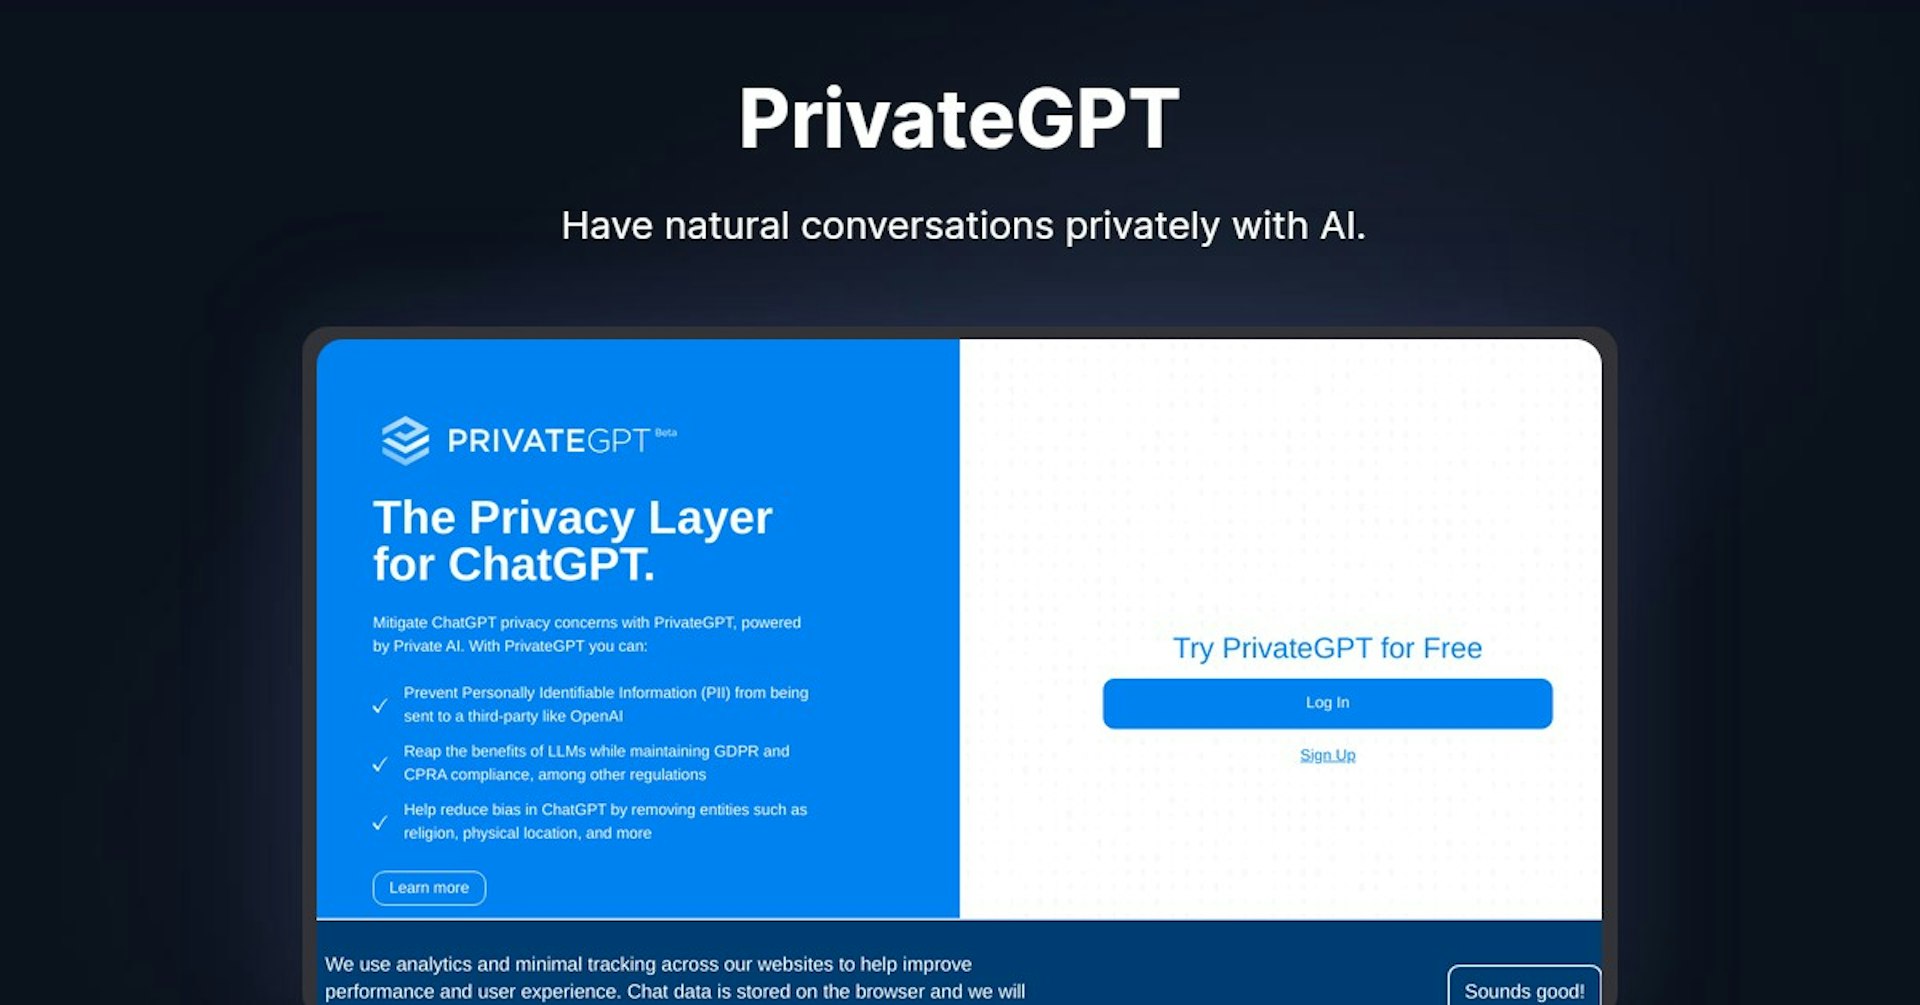 PrivateGPT